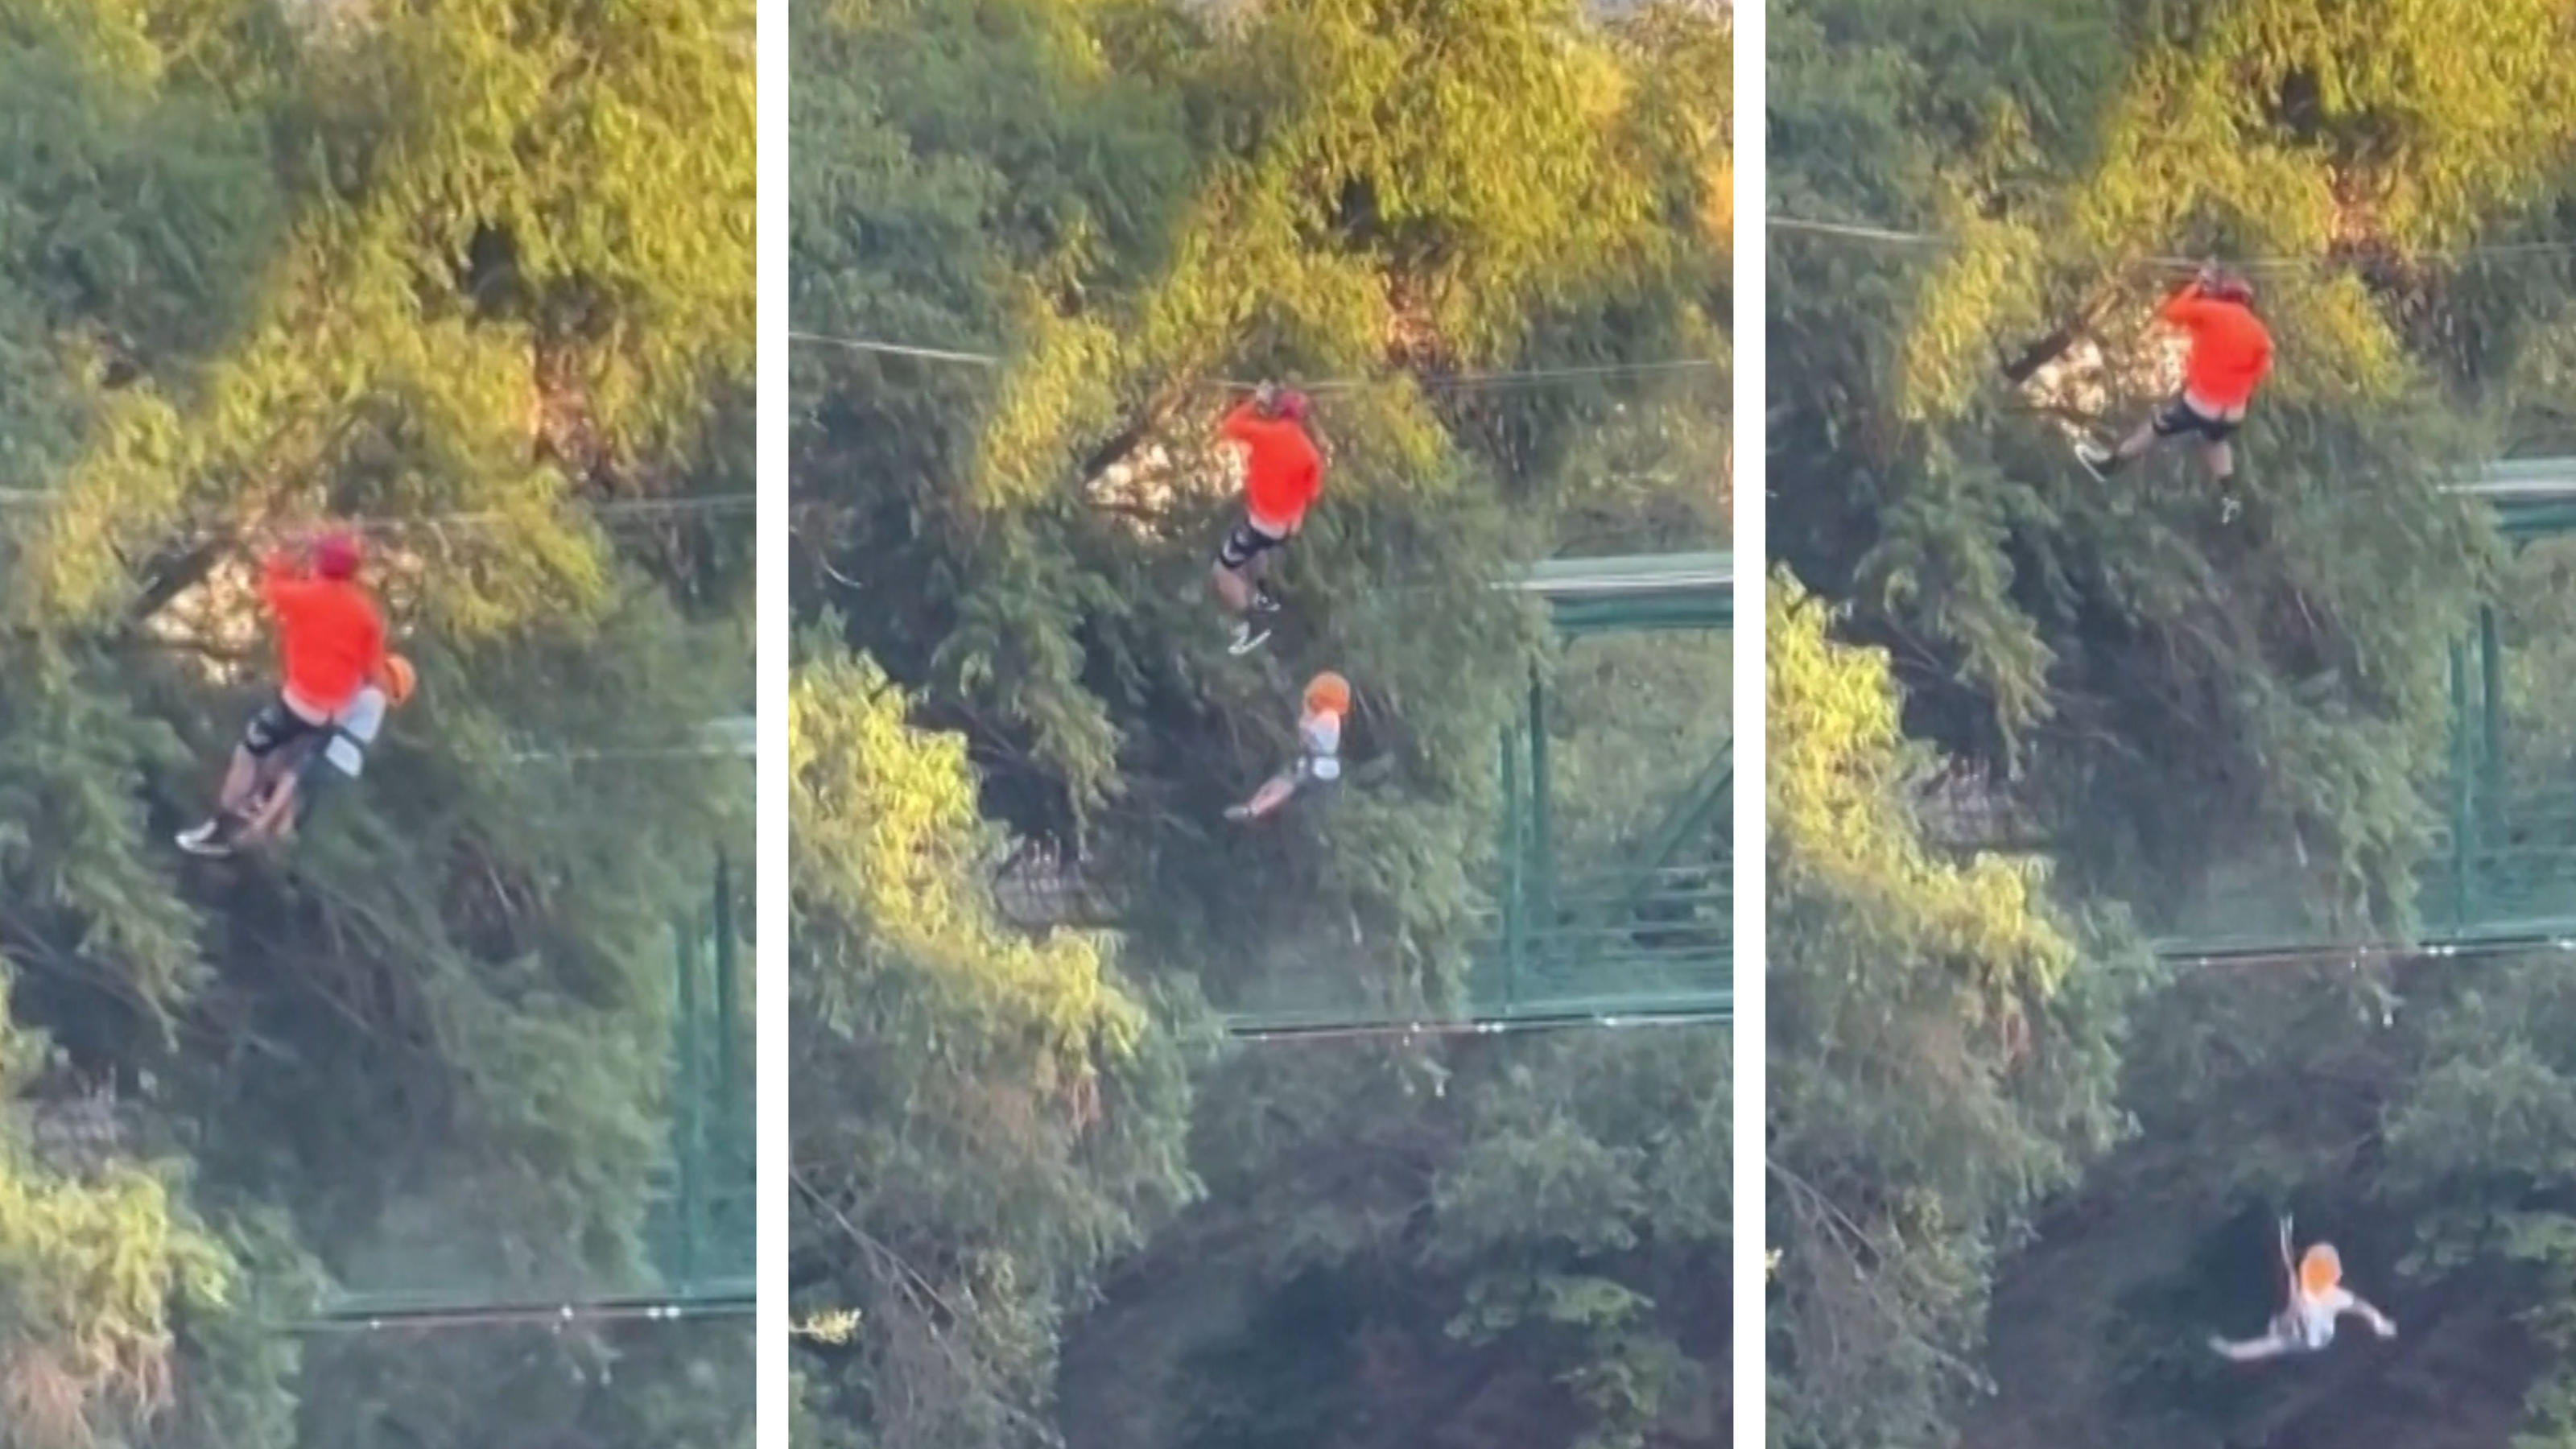 Boy (6) falls from zipline horror at amusement park